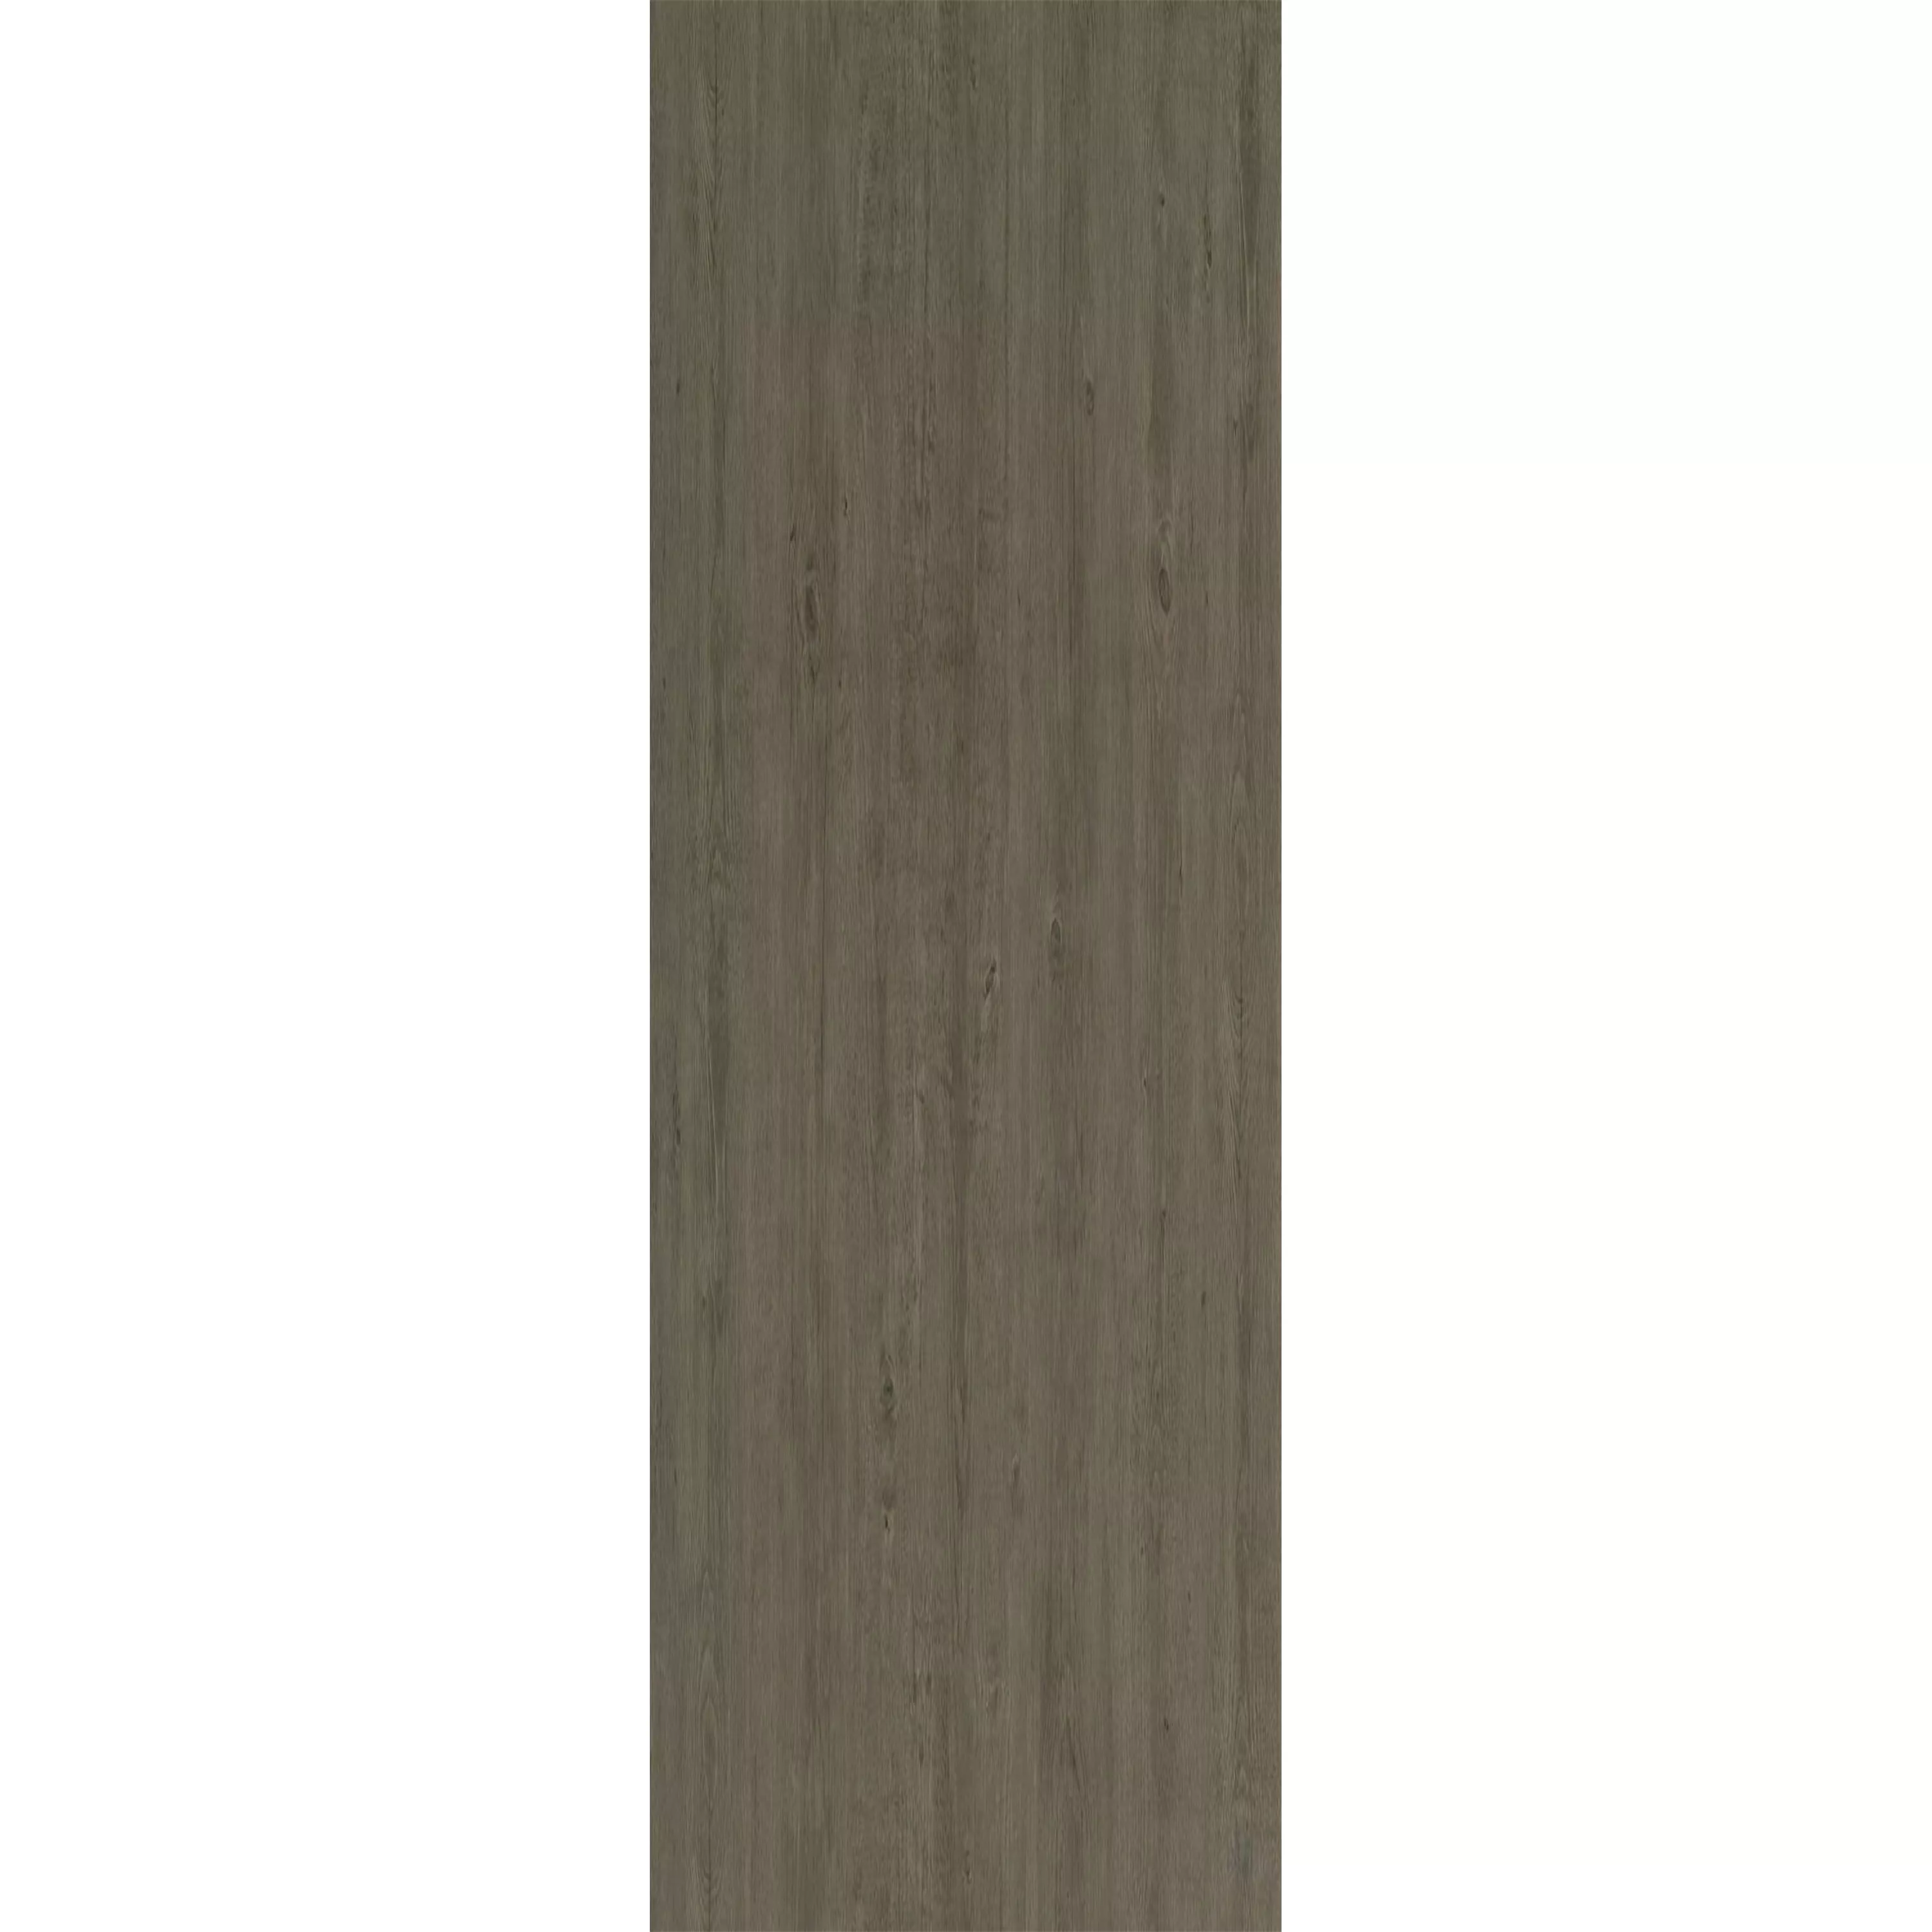 Piastrelle In Vinile Sistema A Clic Woodford Taupe 17,2x121cm